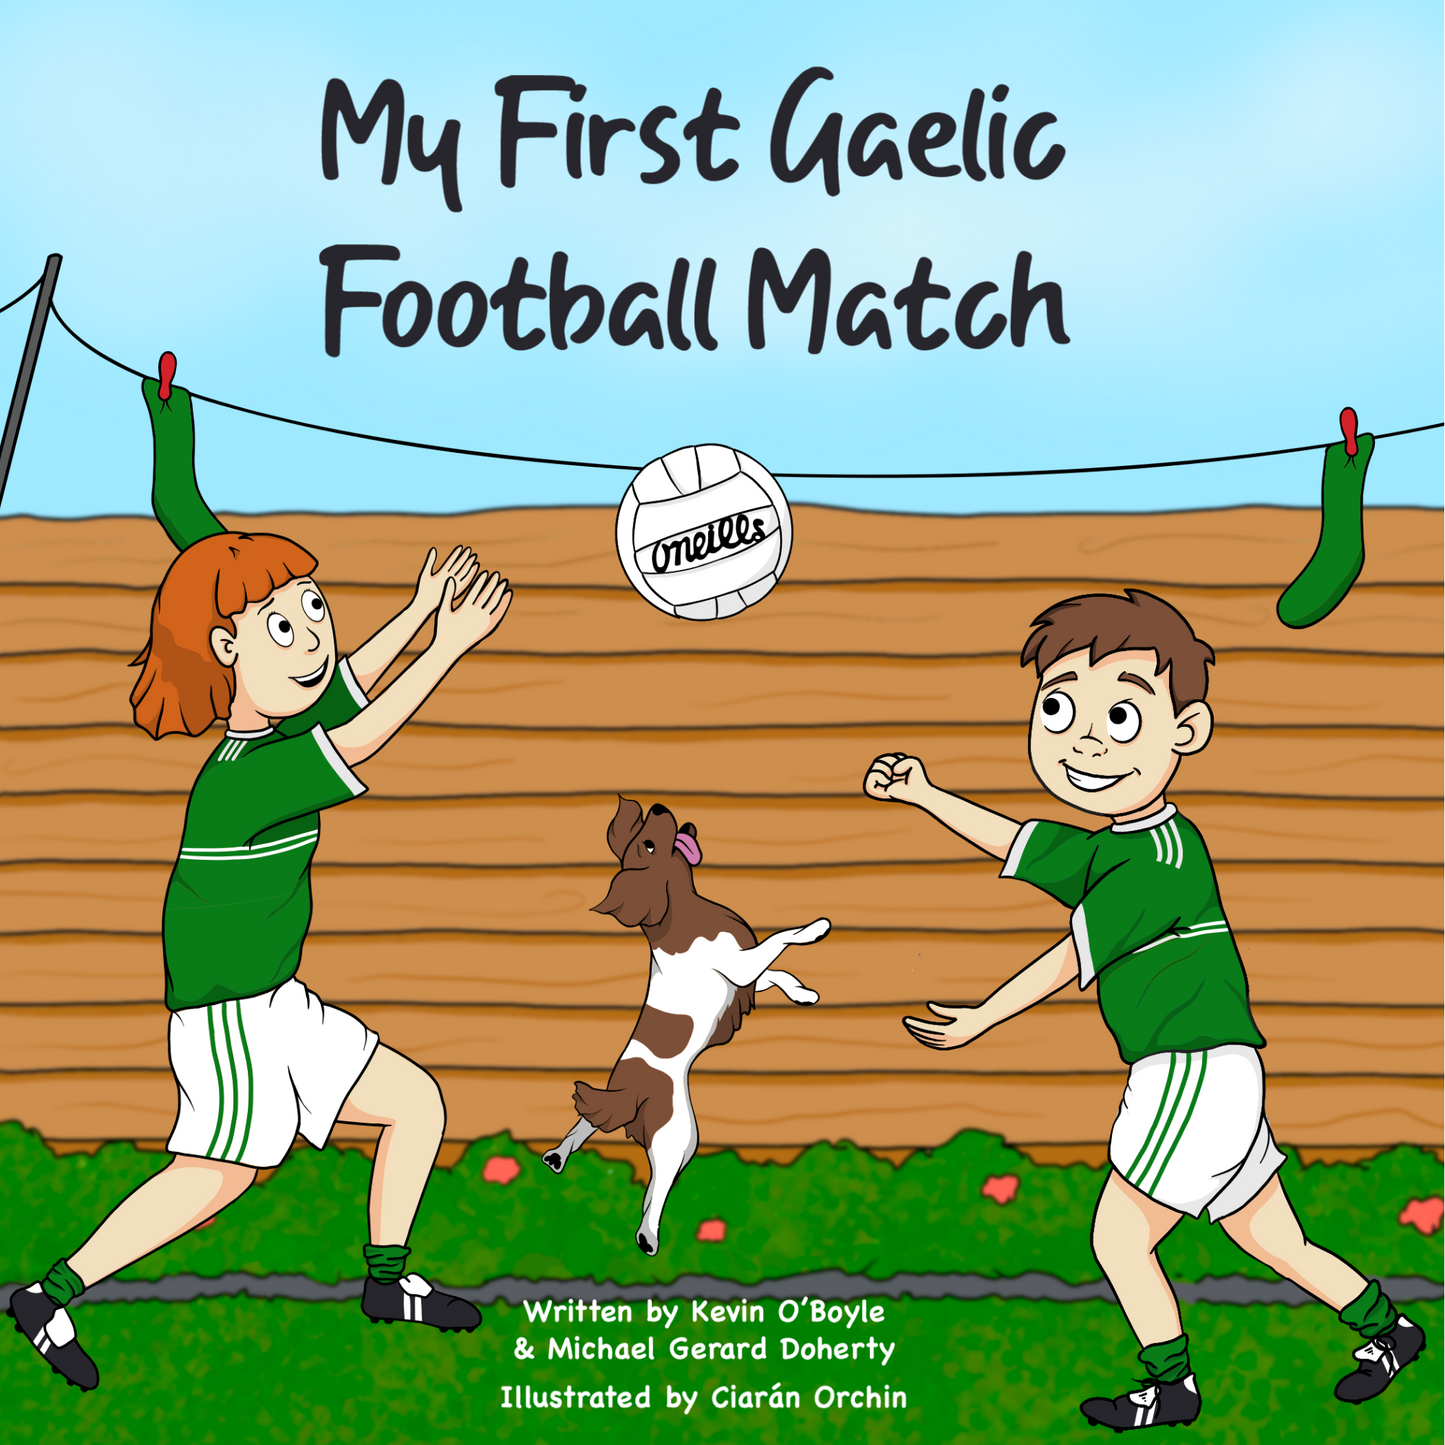 My First Gaelic Football Match